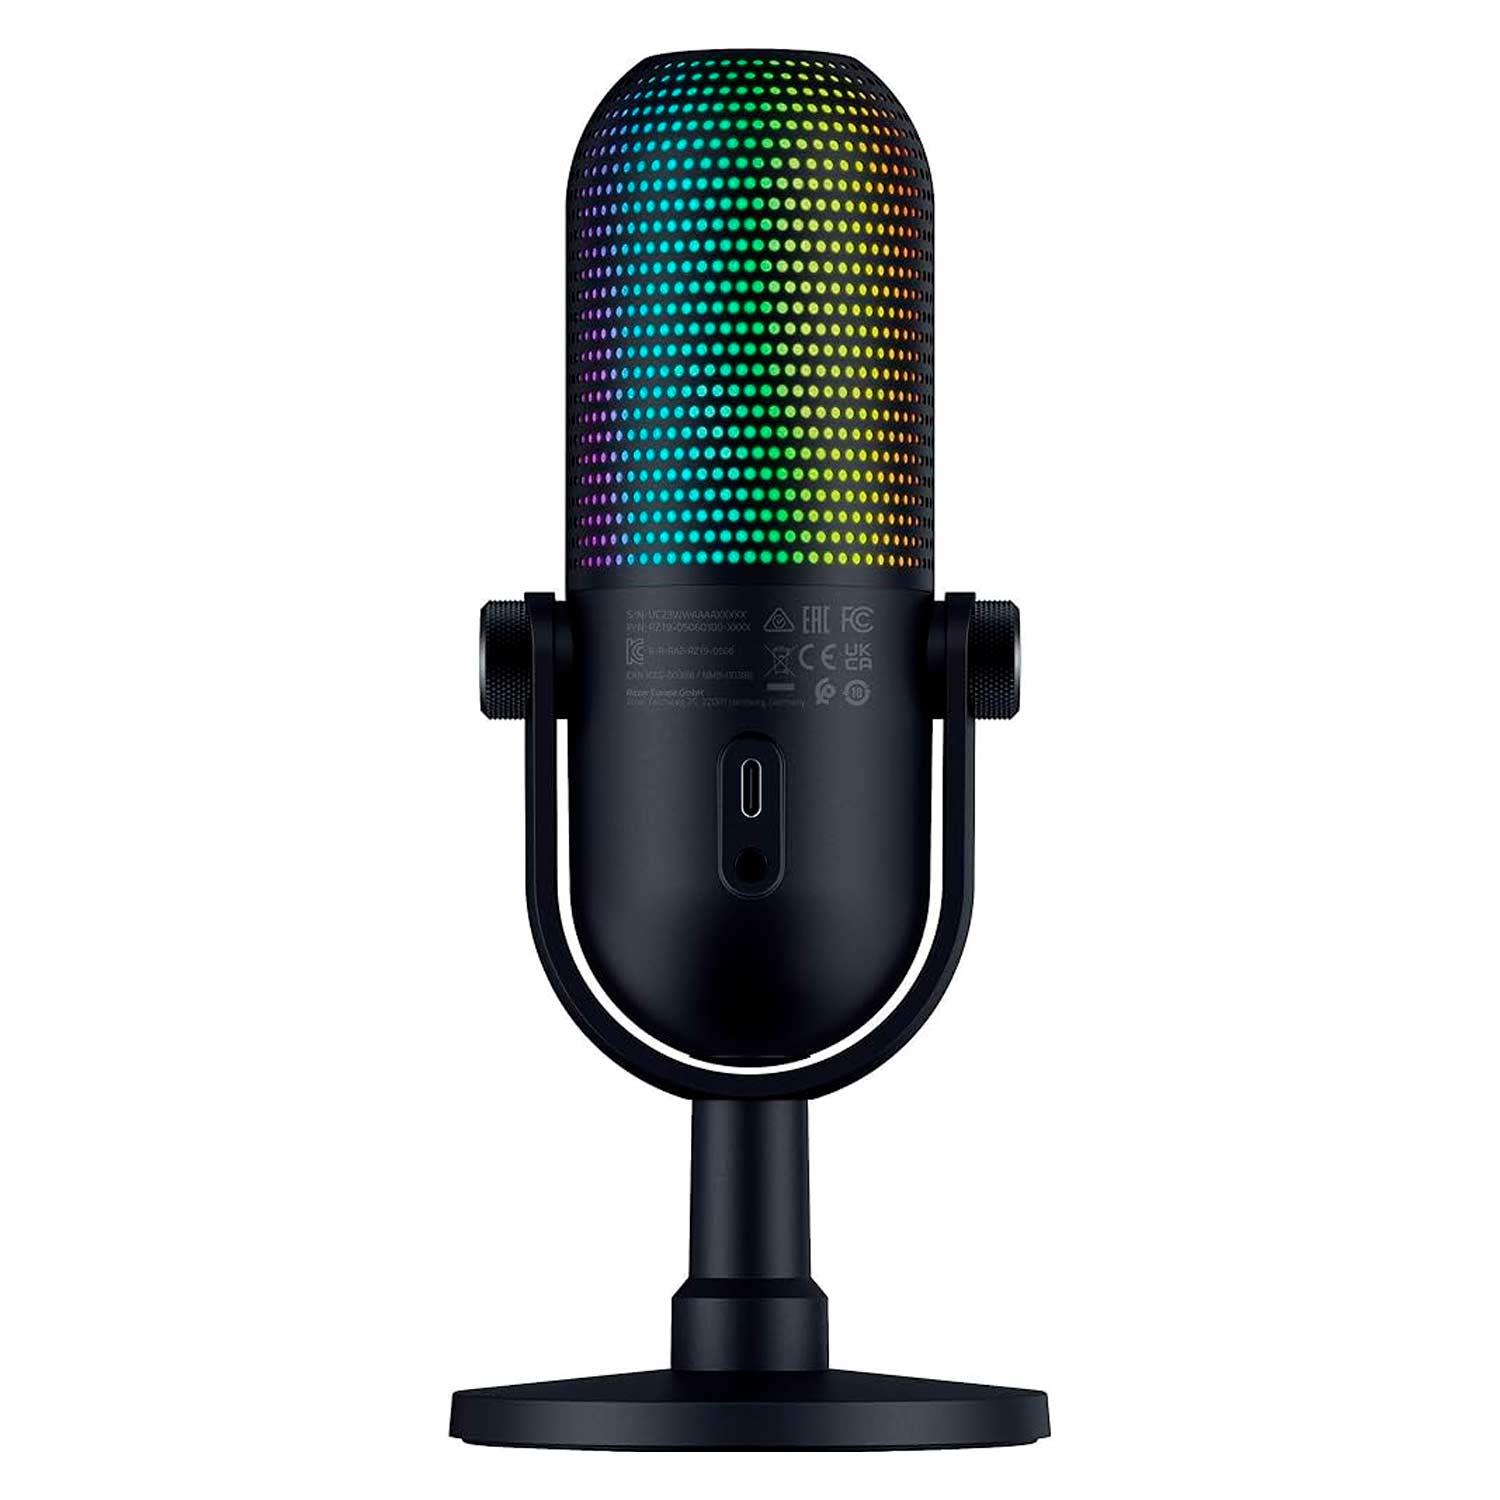 Microfone Condensador Razer Seiren V3 Chroma USB-C - Preto